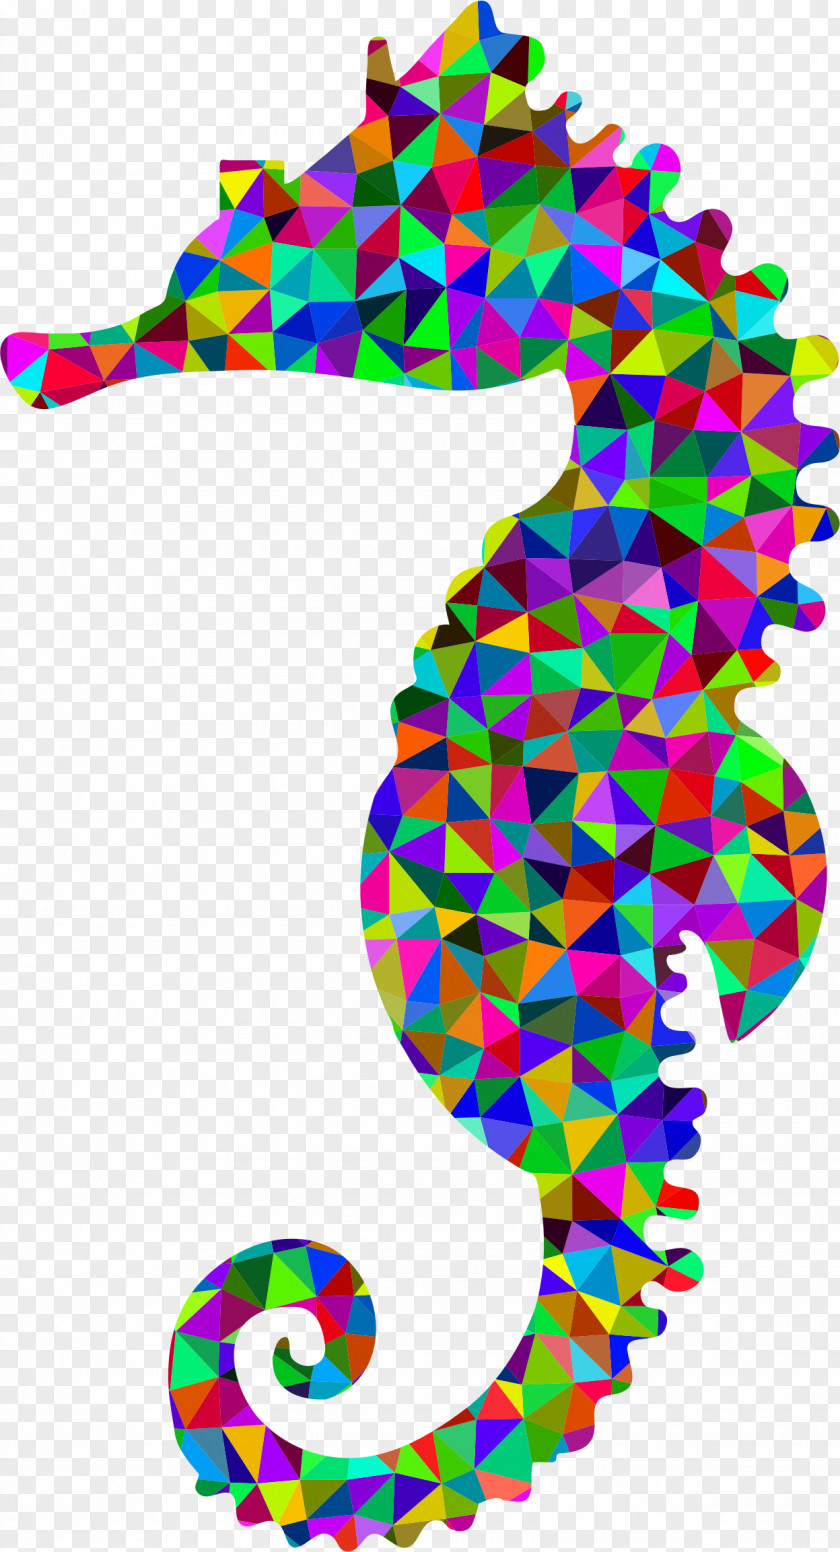 Seahorse Silhouette Clip Art PNG